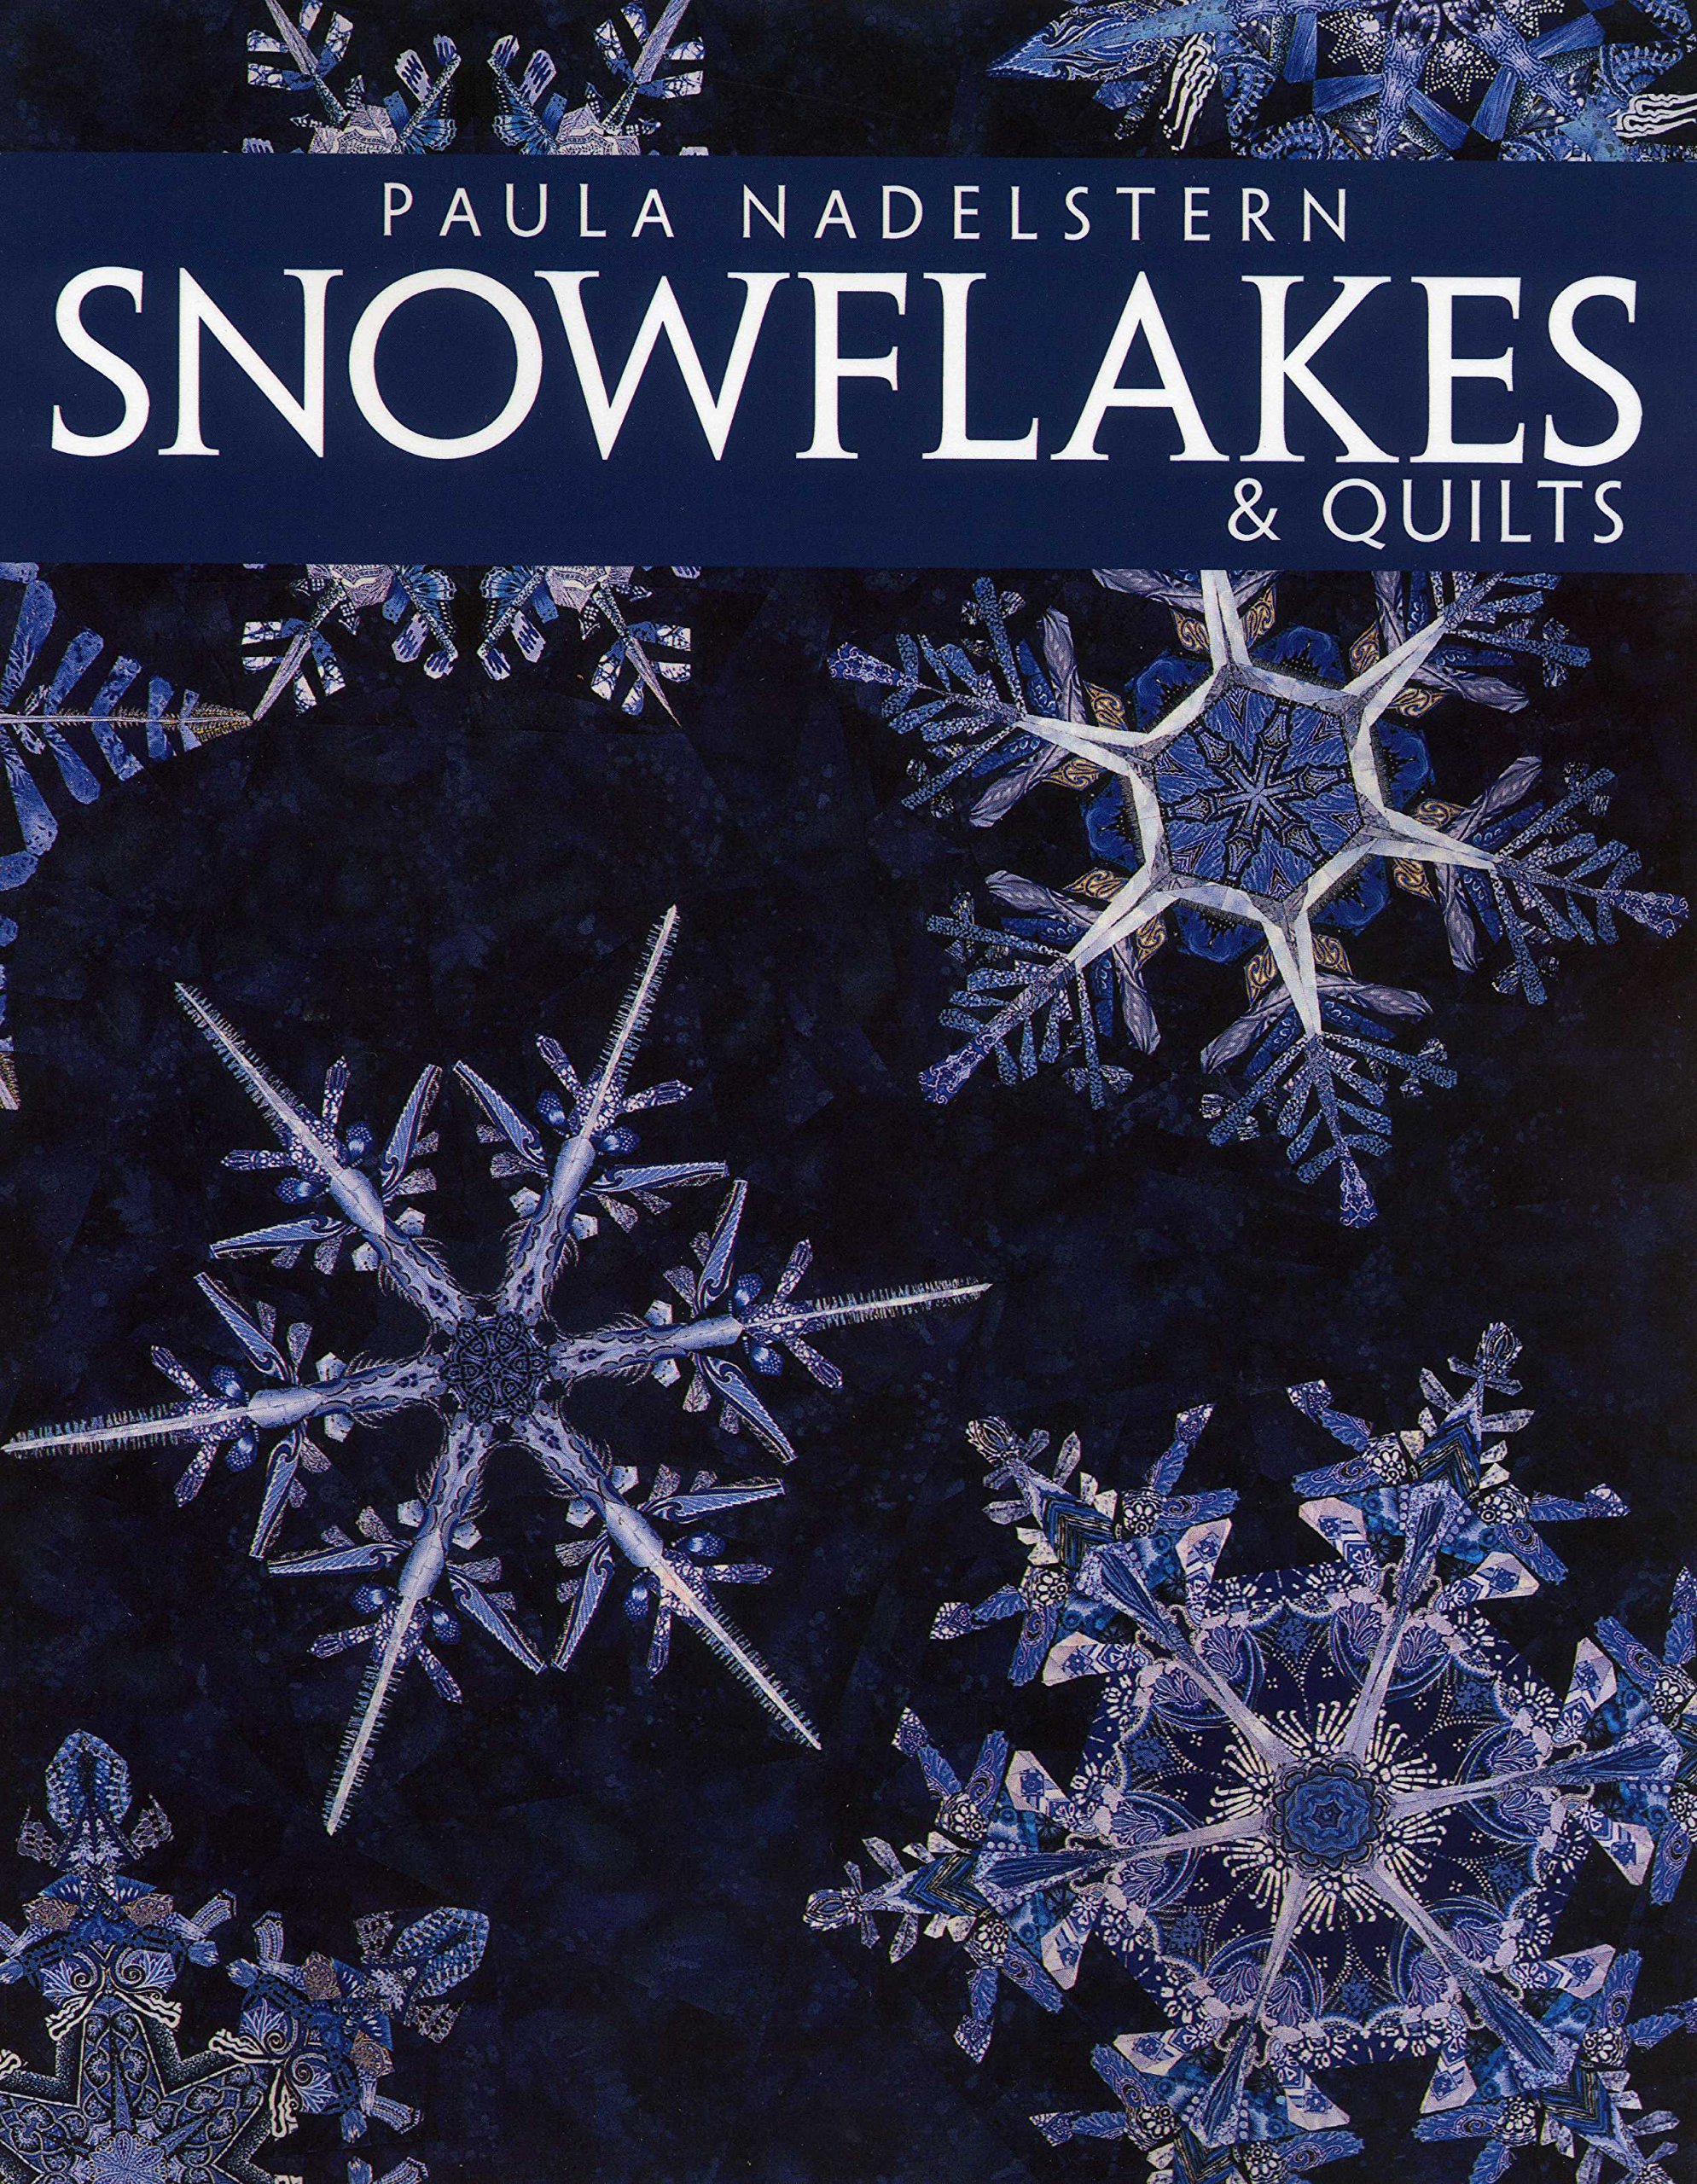 Snowflakes & Quilts: Paula Del Nadelstern: 9781571201553: Amazon.com ...